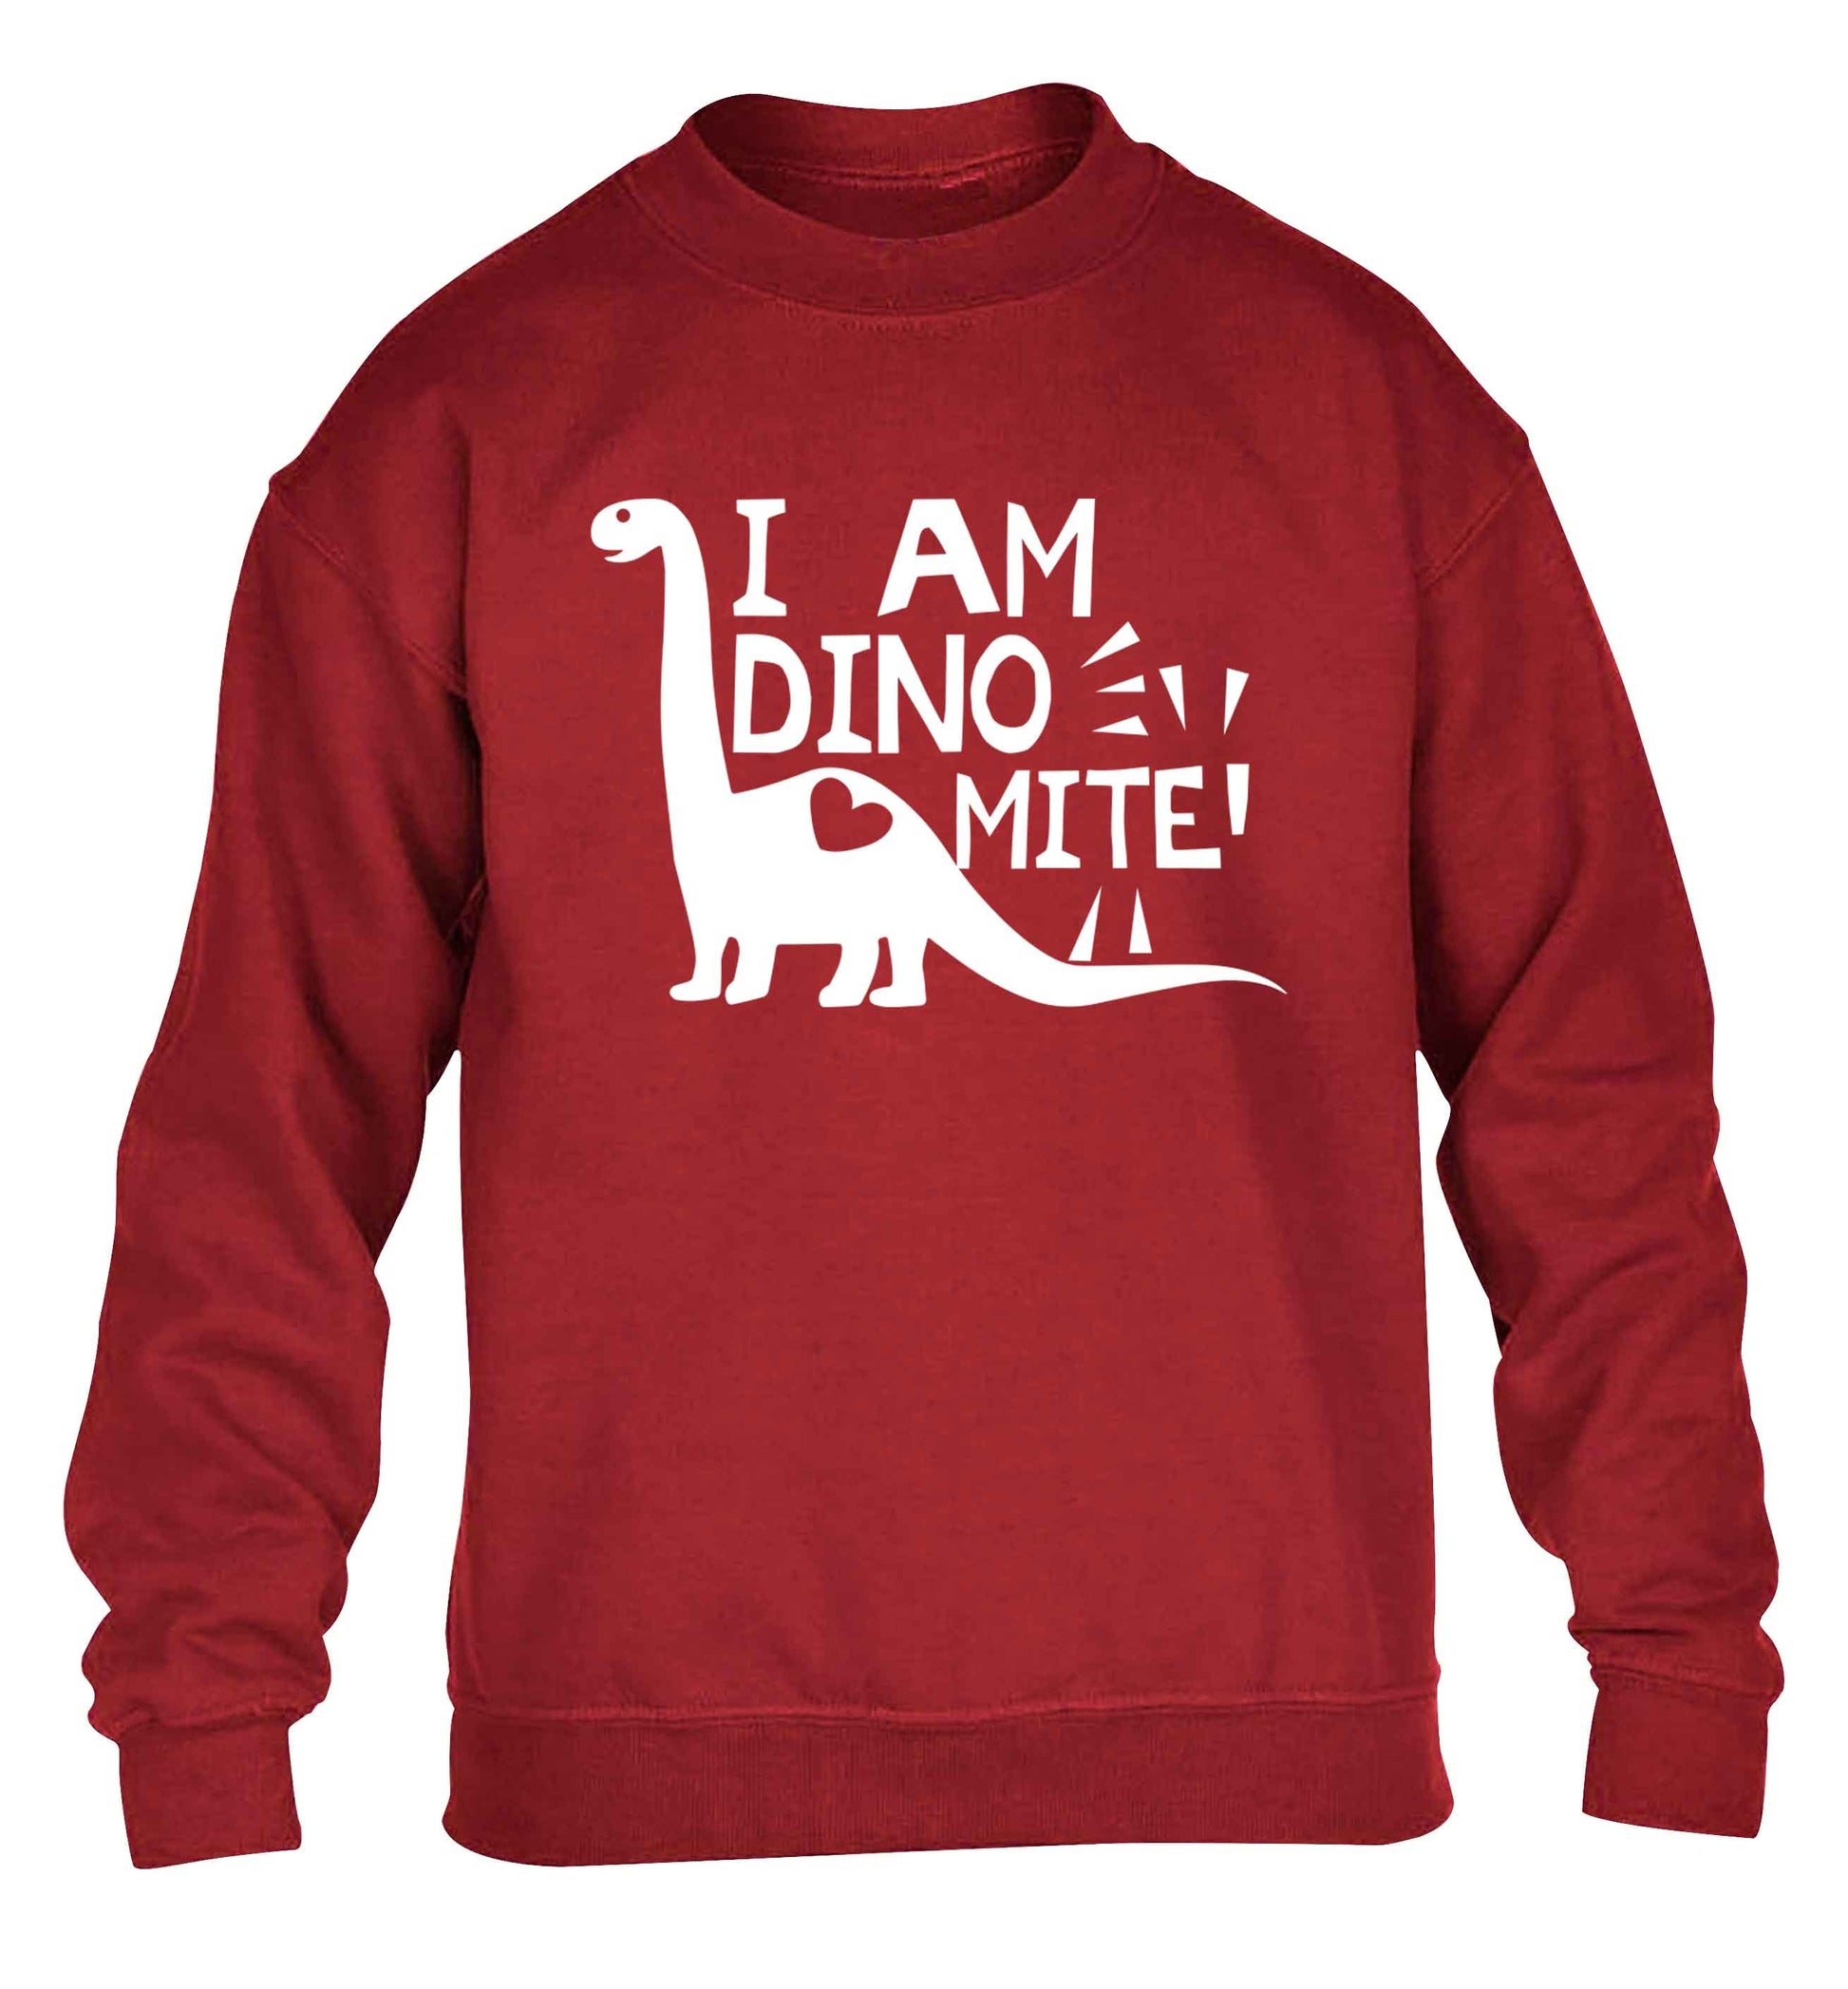 I am dinomite! children's grey sweater 12-13 Years